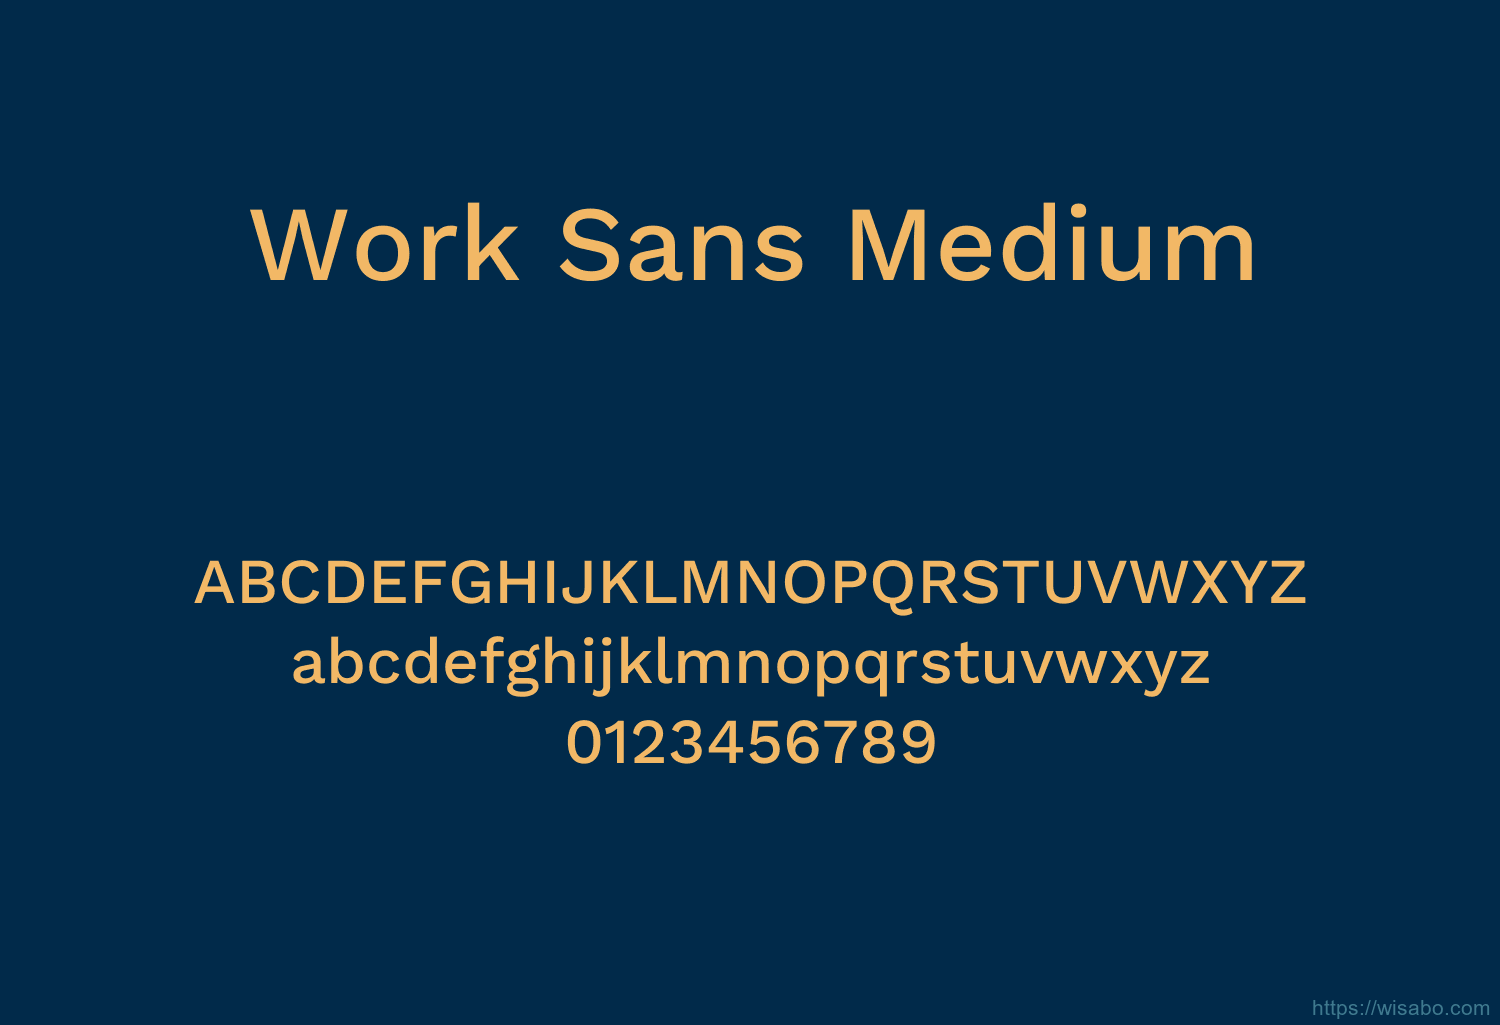 Work Sans Medium